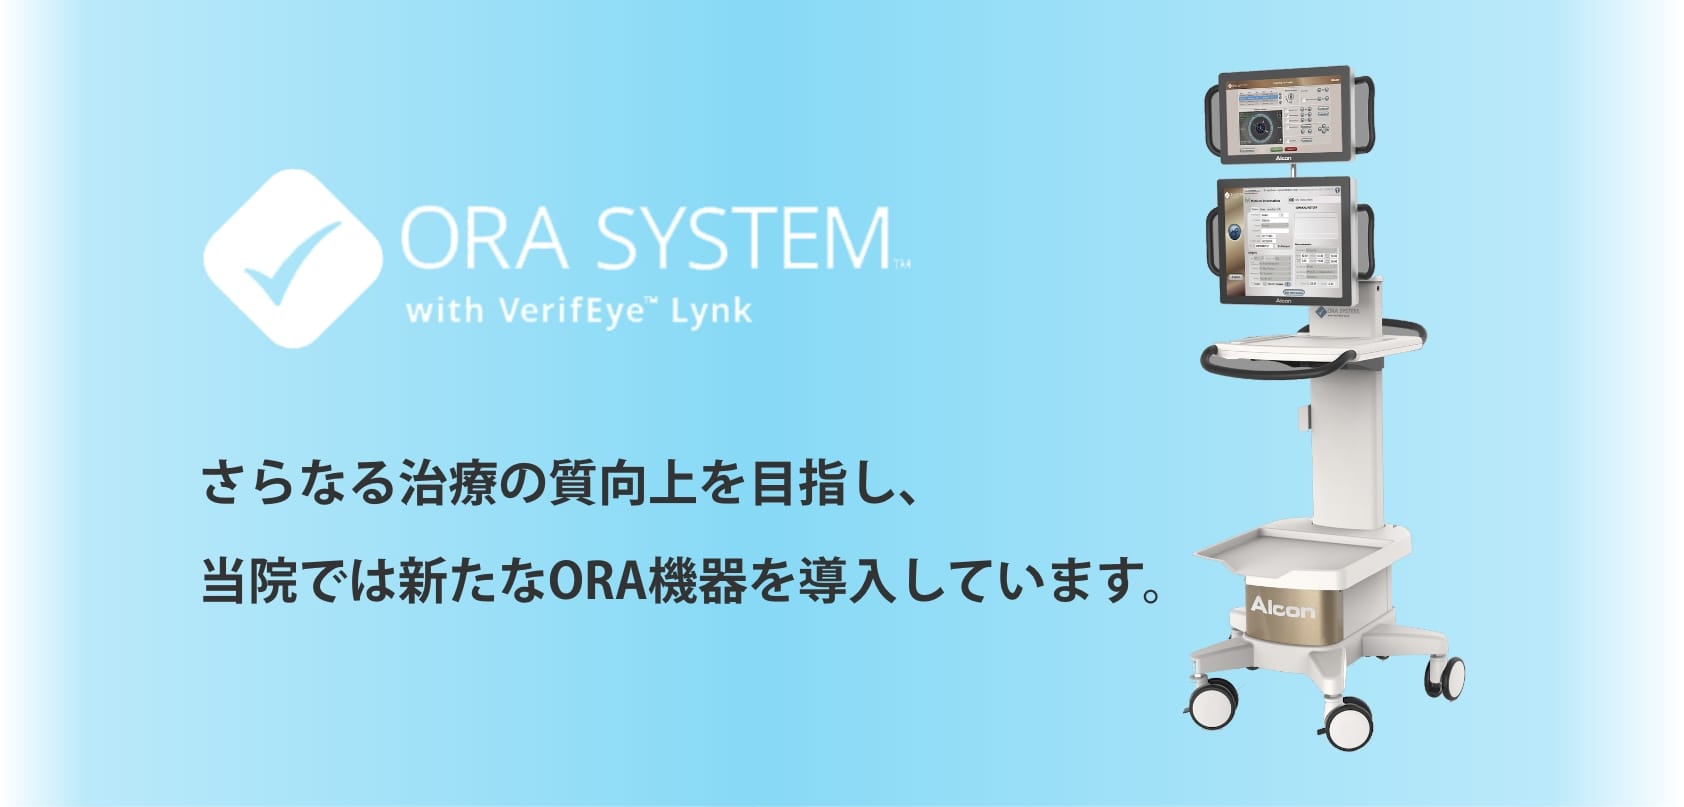 ORA SYSTEM™ WITH VERIFEYE™ LYNK スマホサイト